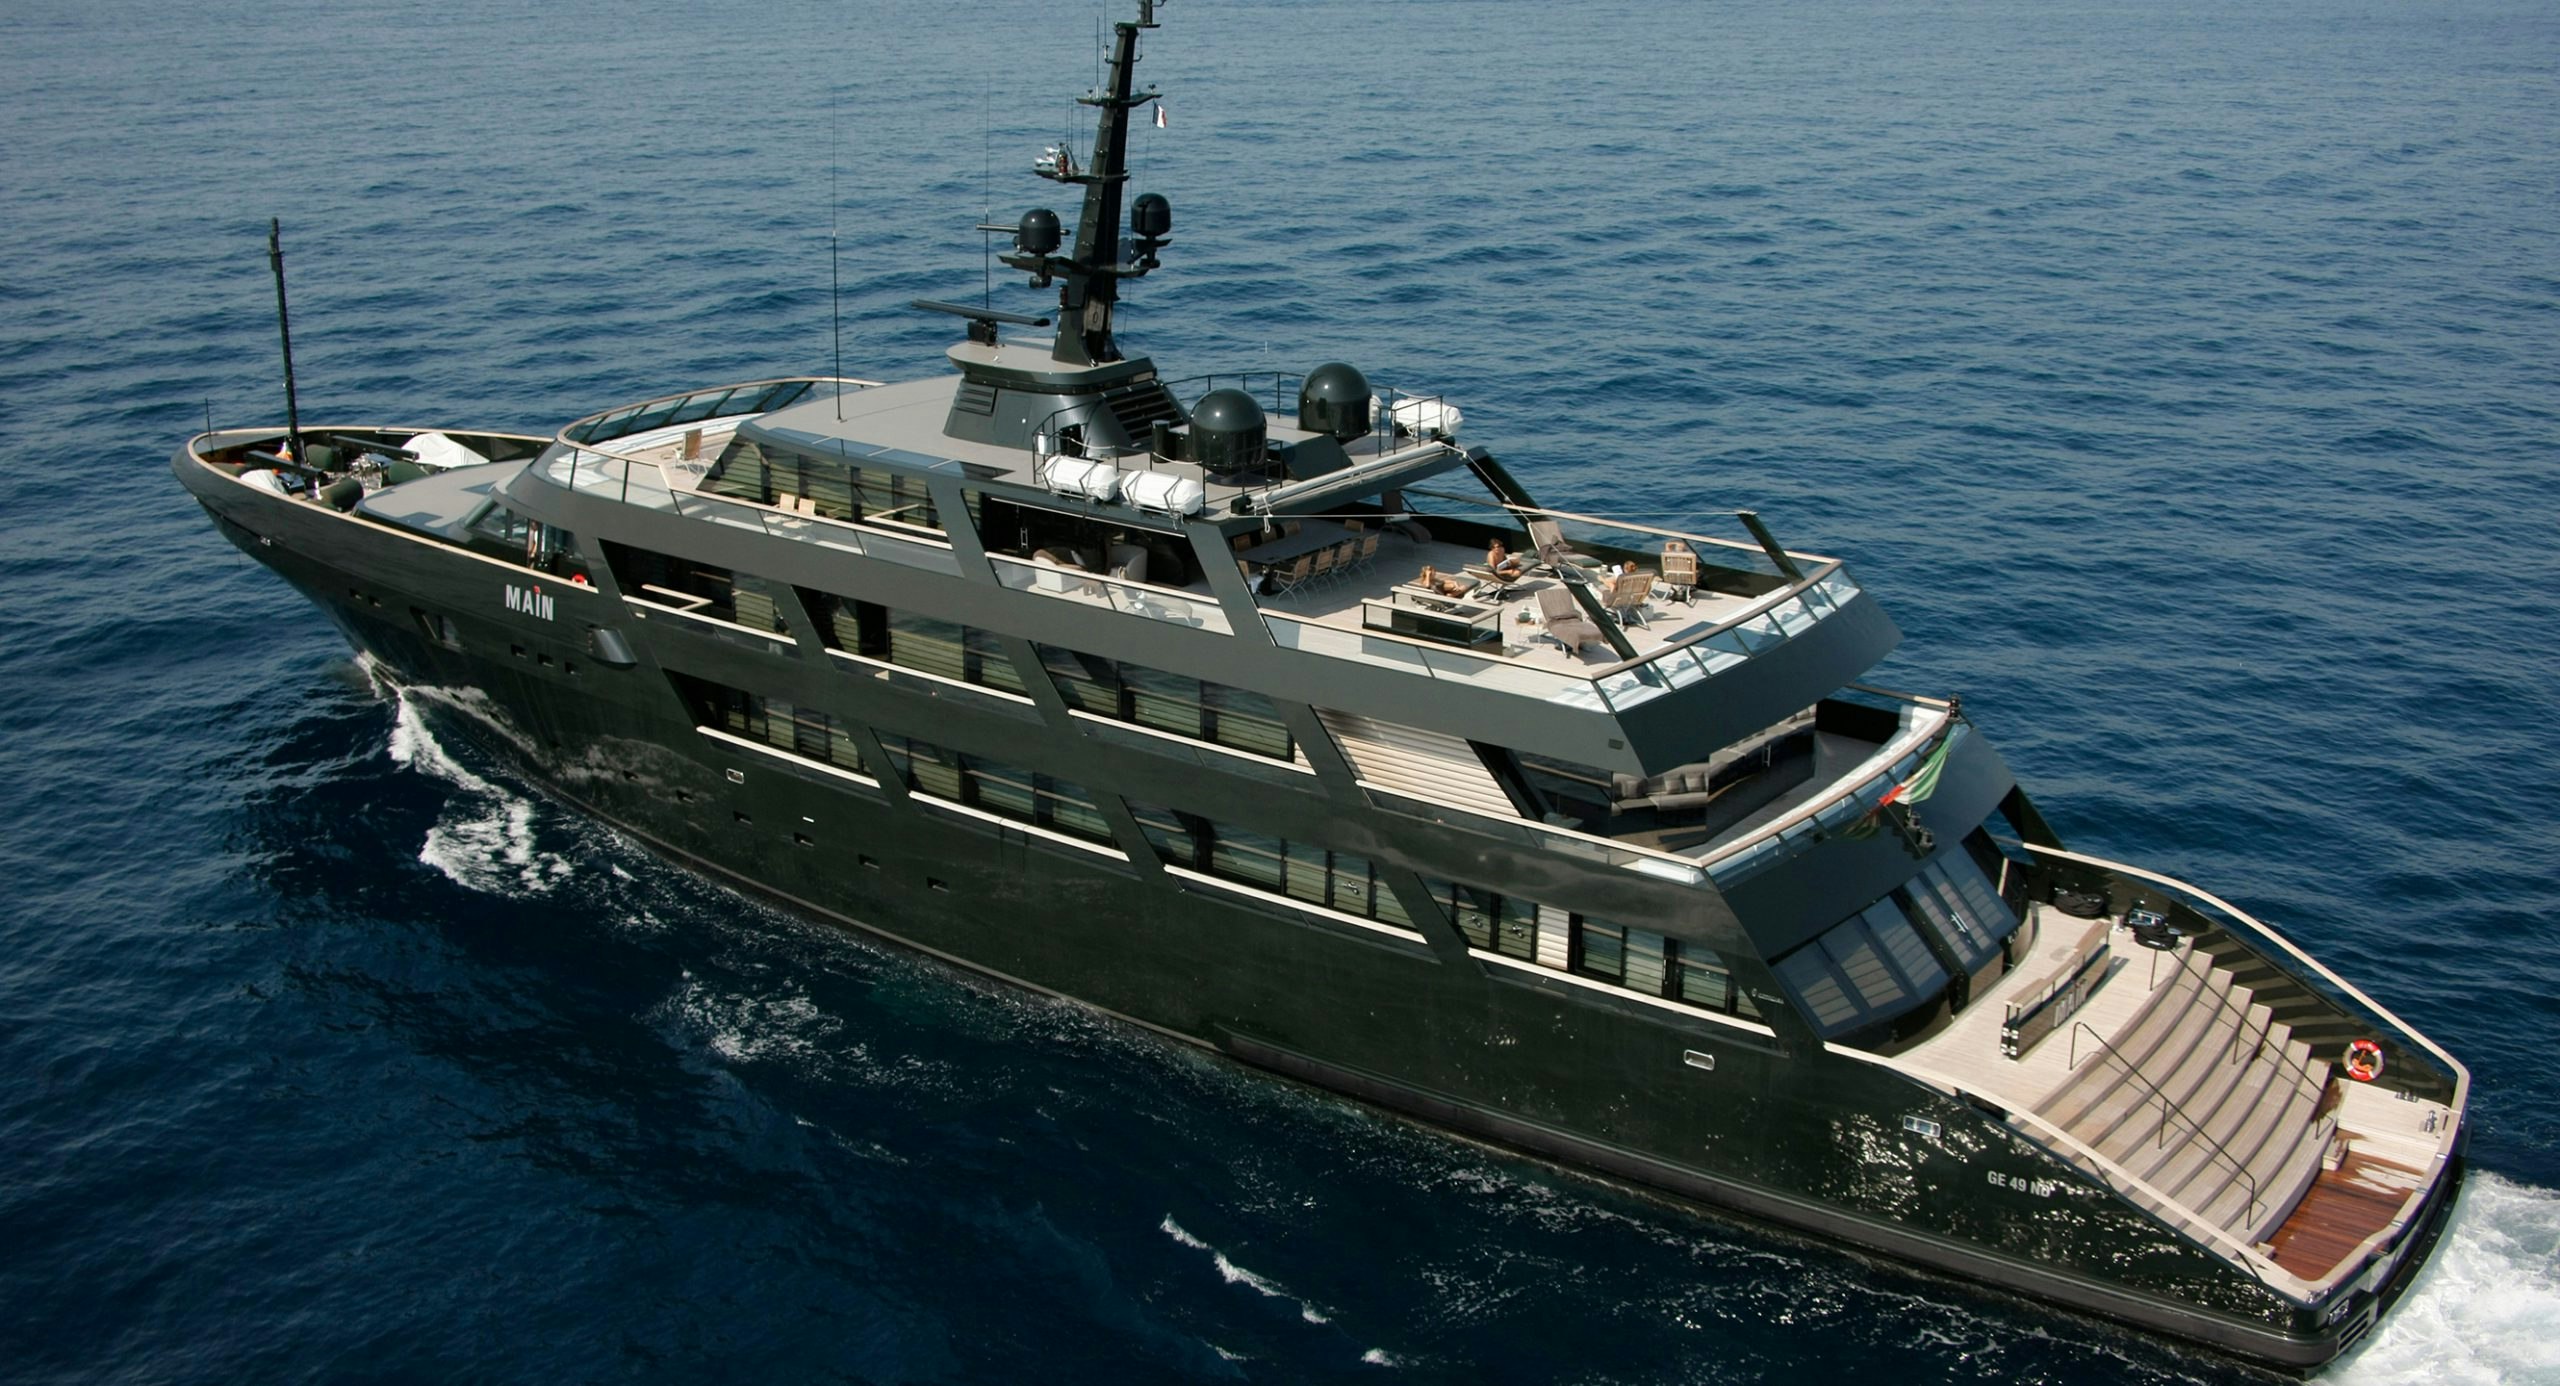 Superyacht Codecasa Main par le designer Giorgio Armani